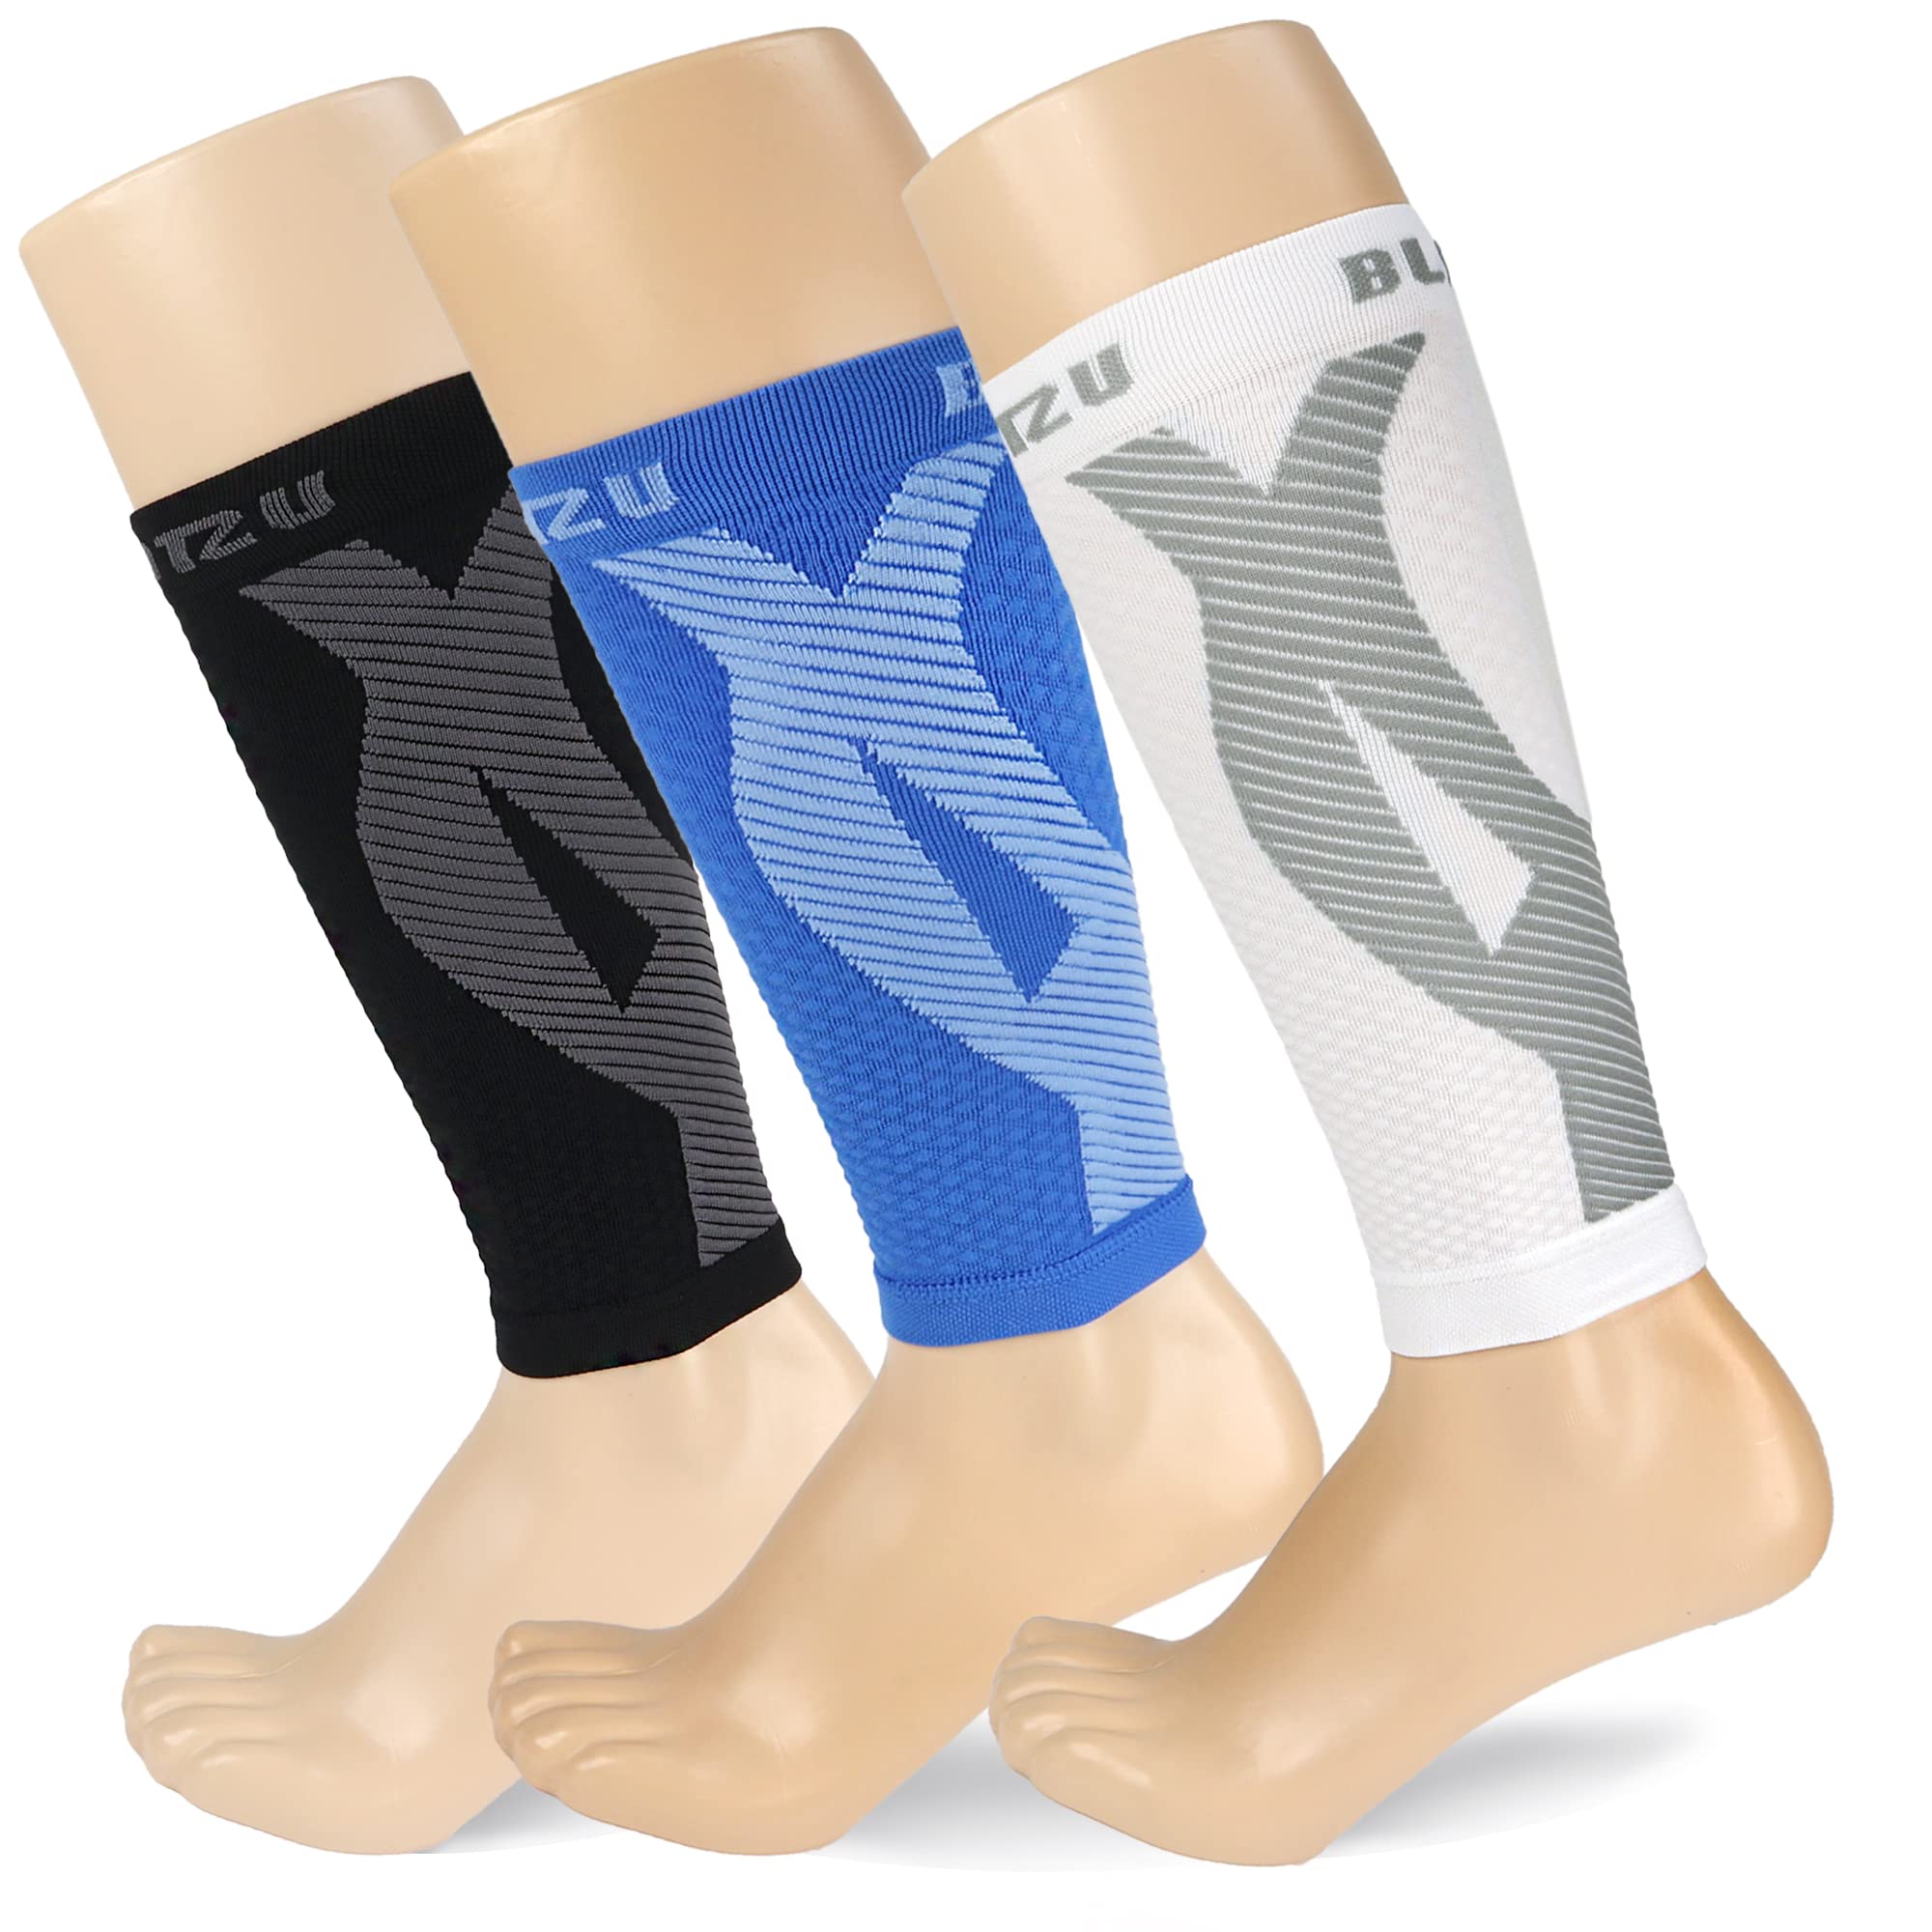  BLITZU Compression Socks Men, Knee High Socks For Women 20-30  mmhg. Best Compression Stockings For Leg Pain Relief, Better Blood Flow &  Circulation, Great For Pregnant Women & Nurse BLACK S 